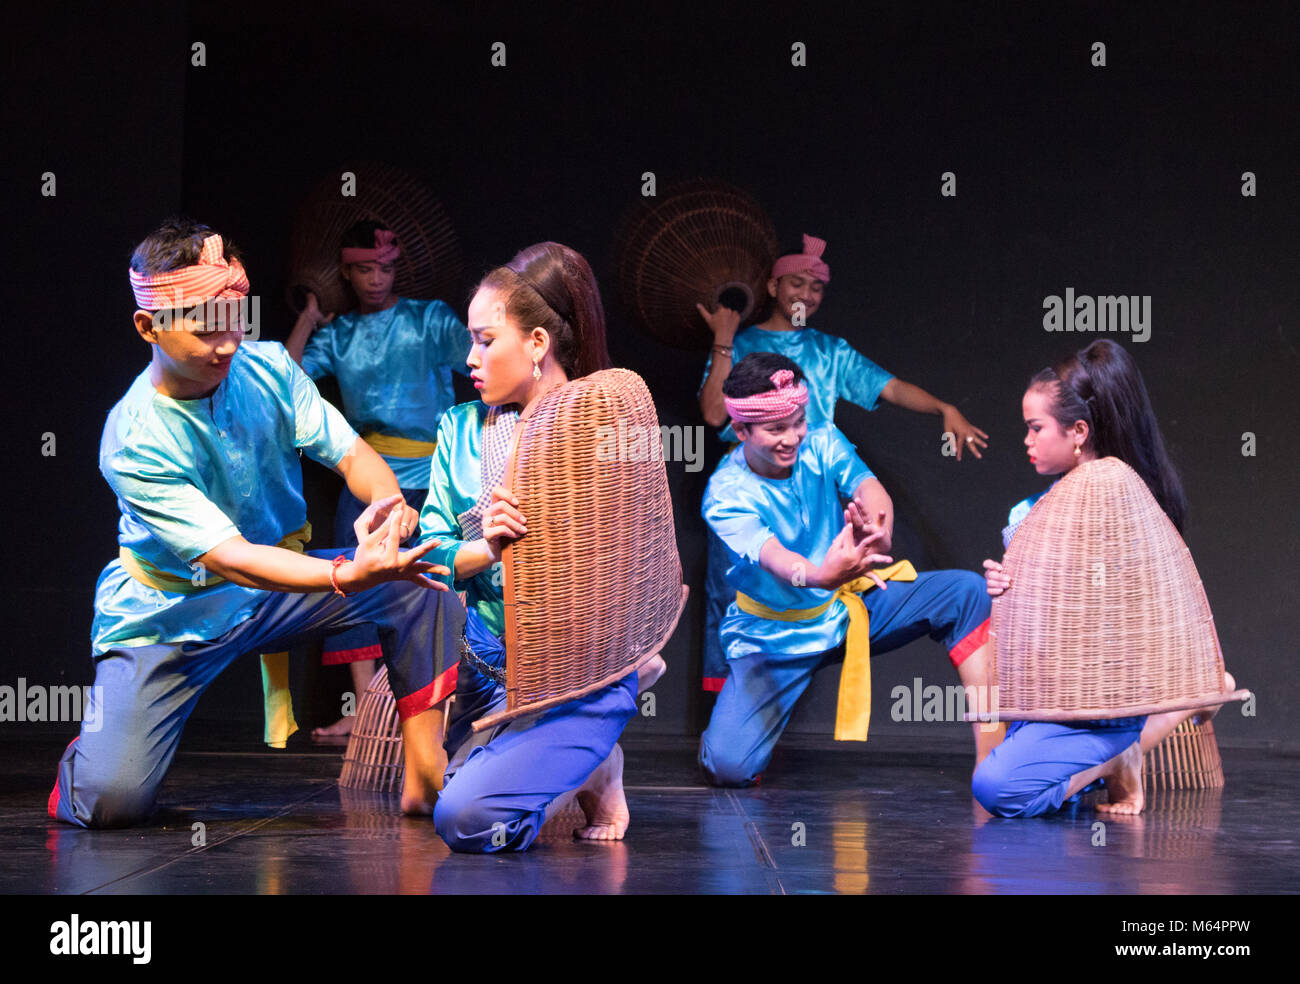 Cambodia dancing - traditional folk dancing, Phnom Penh, Cambodia, Asia Stock Photo